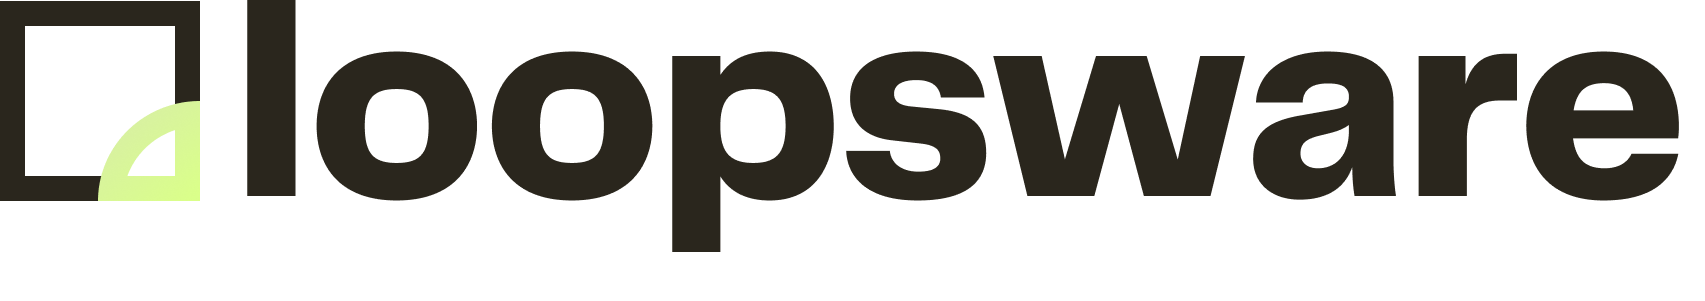 loopsware logo